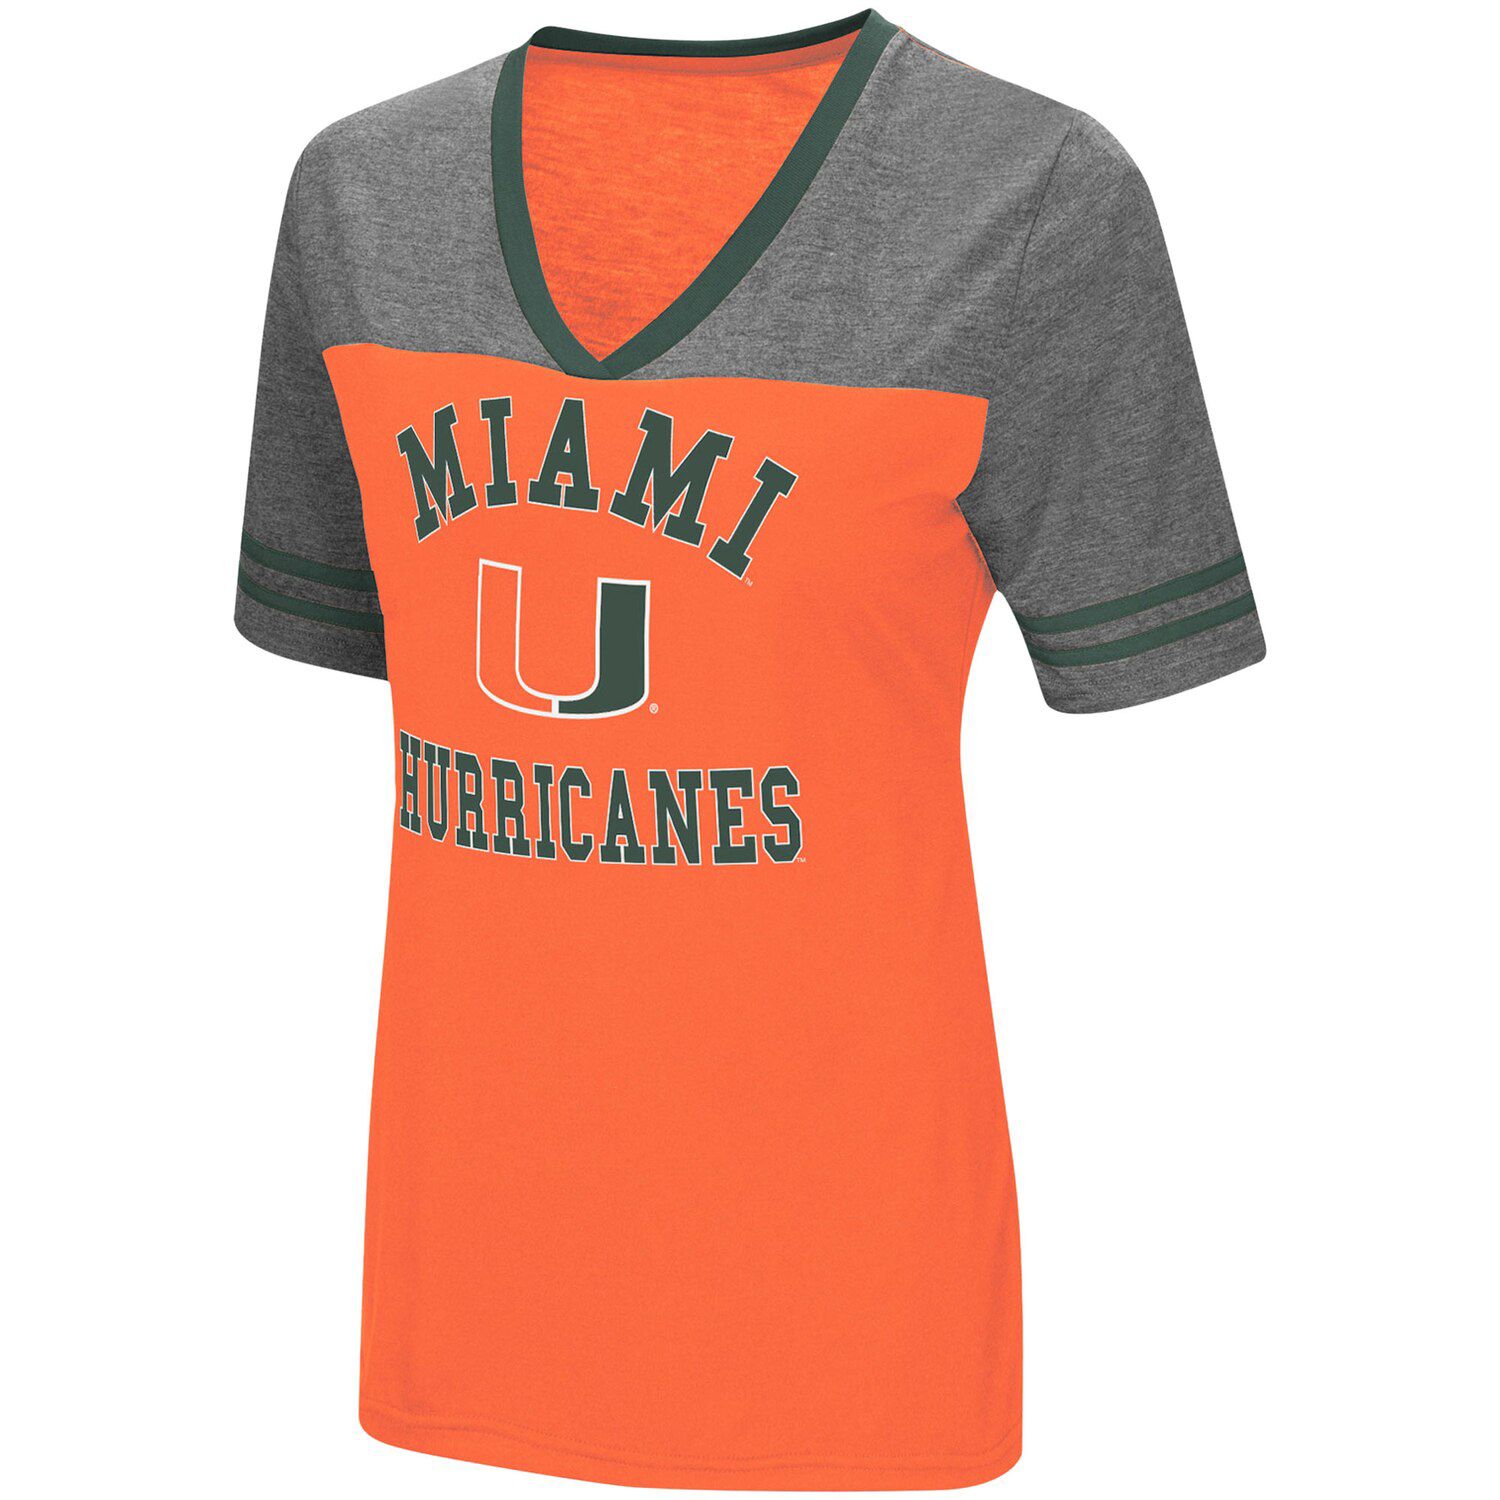 miami hurricanes women's jersey